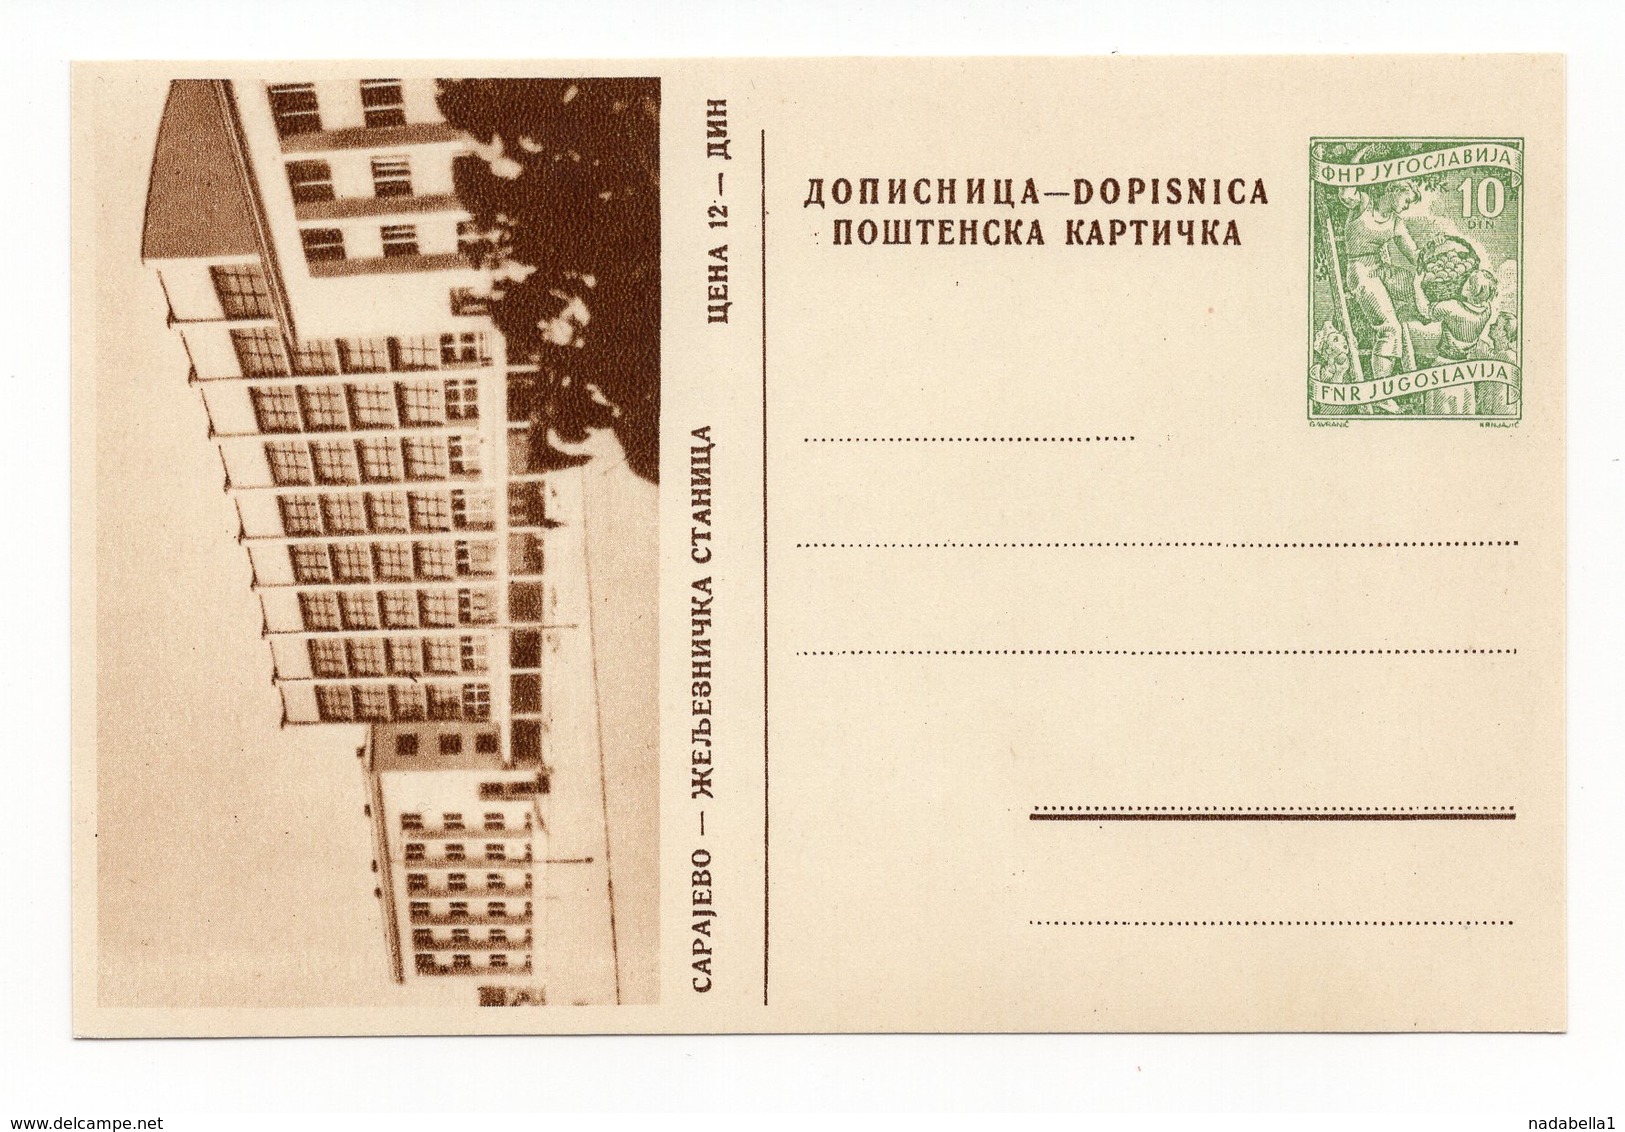 1956,YUGOSLAVIA, SARAJEVO, RAILWAY STATION, BOSNIA,10 DINARA GREEN, ILLUSTRATED STATIONERY CARD, MINT - Postal Stationery